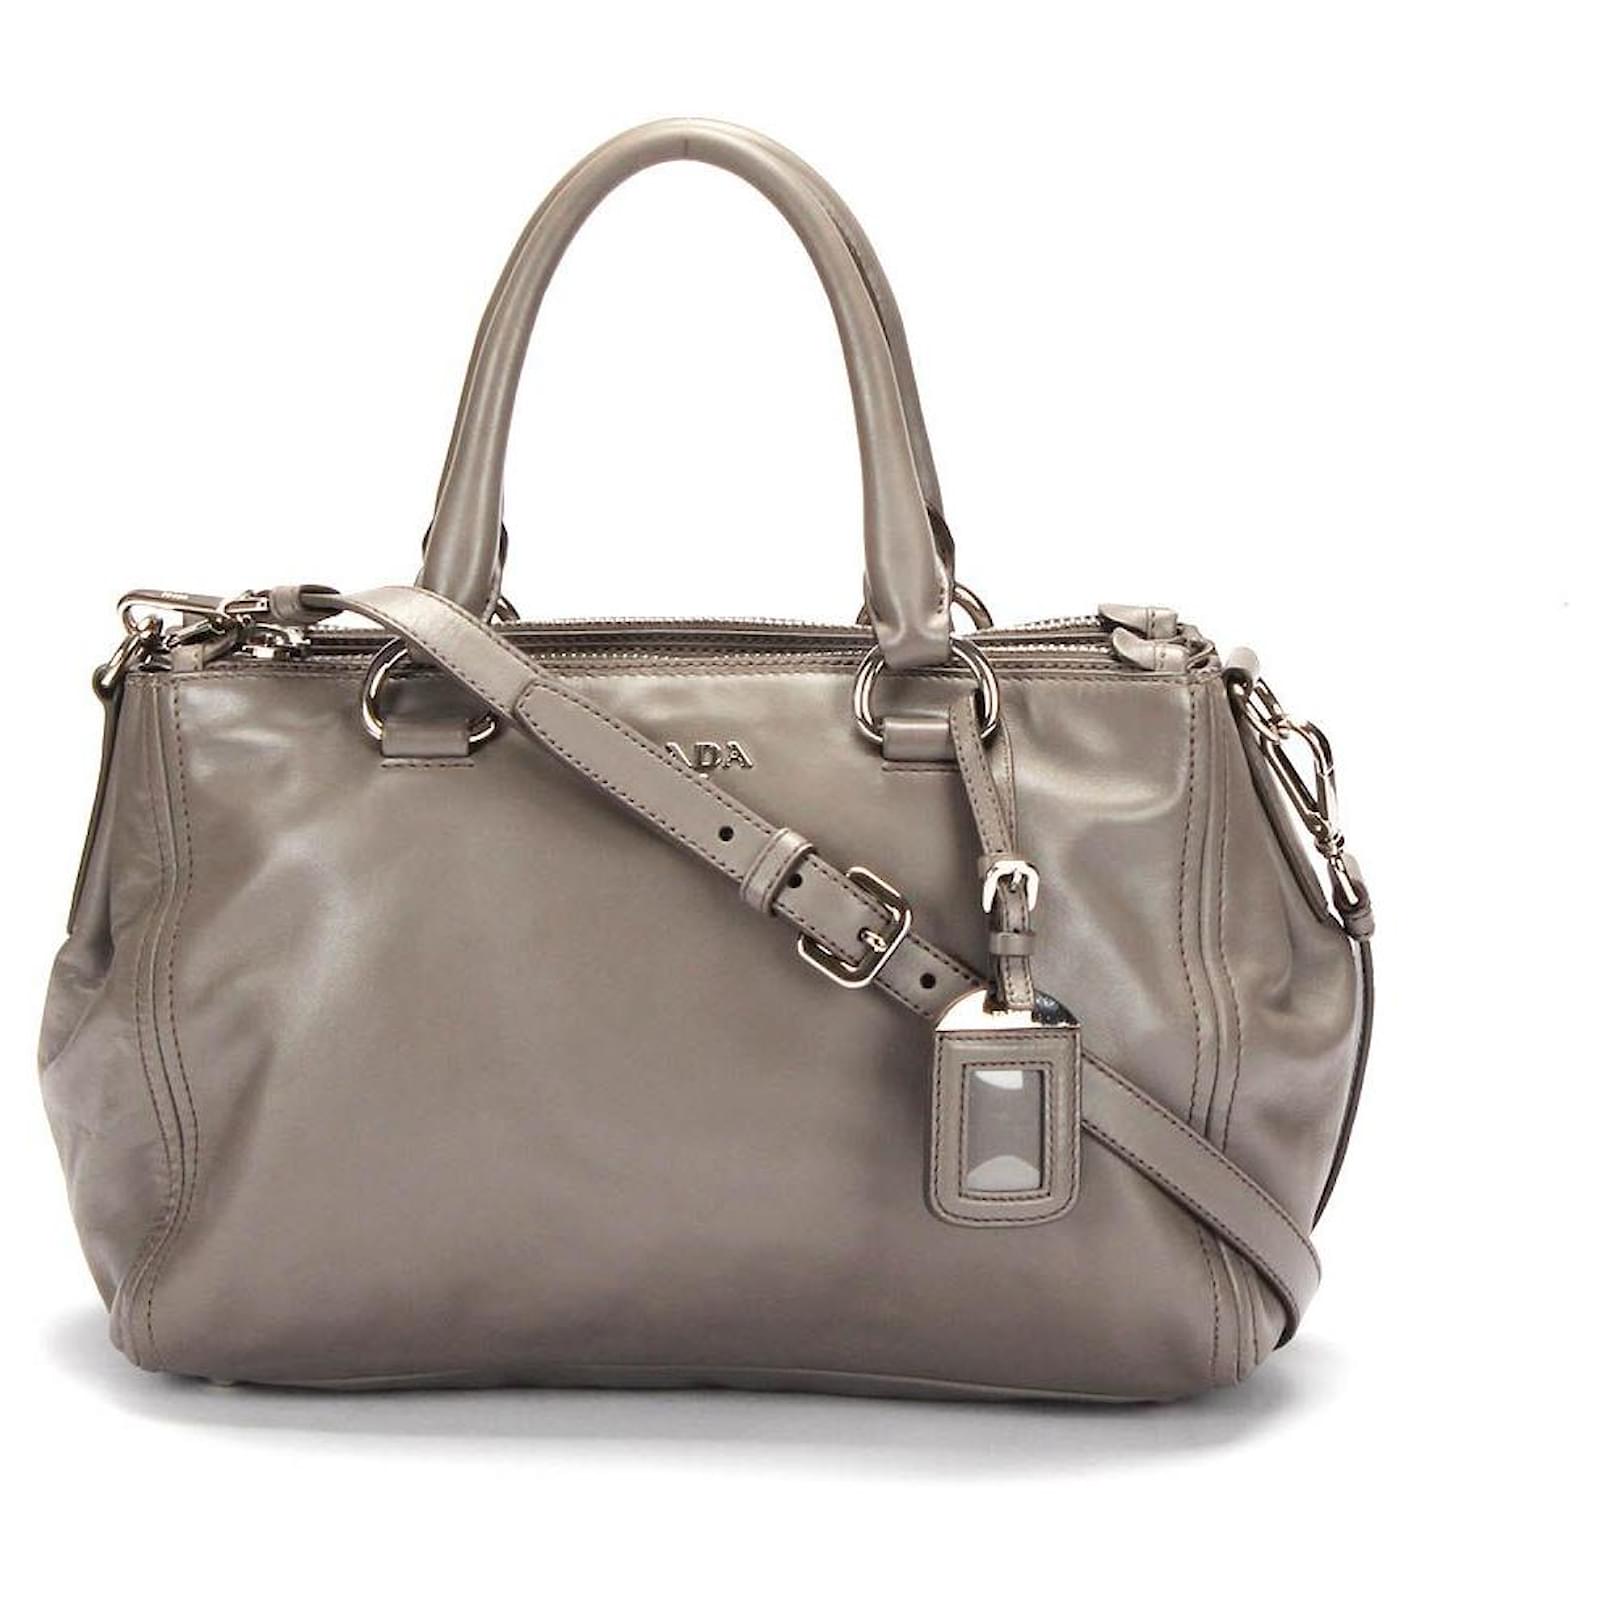 Prada Argilla Leather Tote Bag in Gray